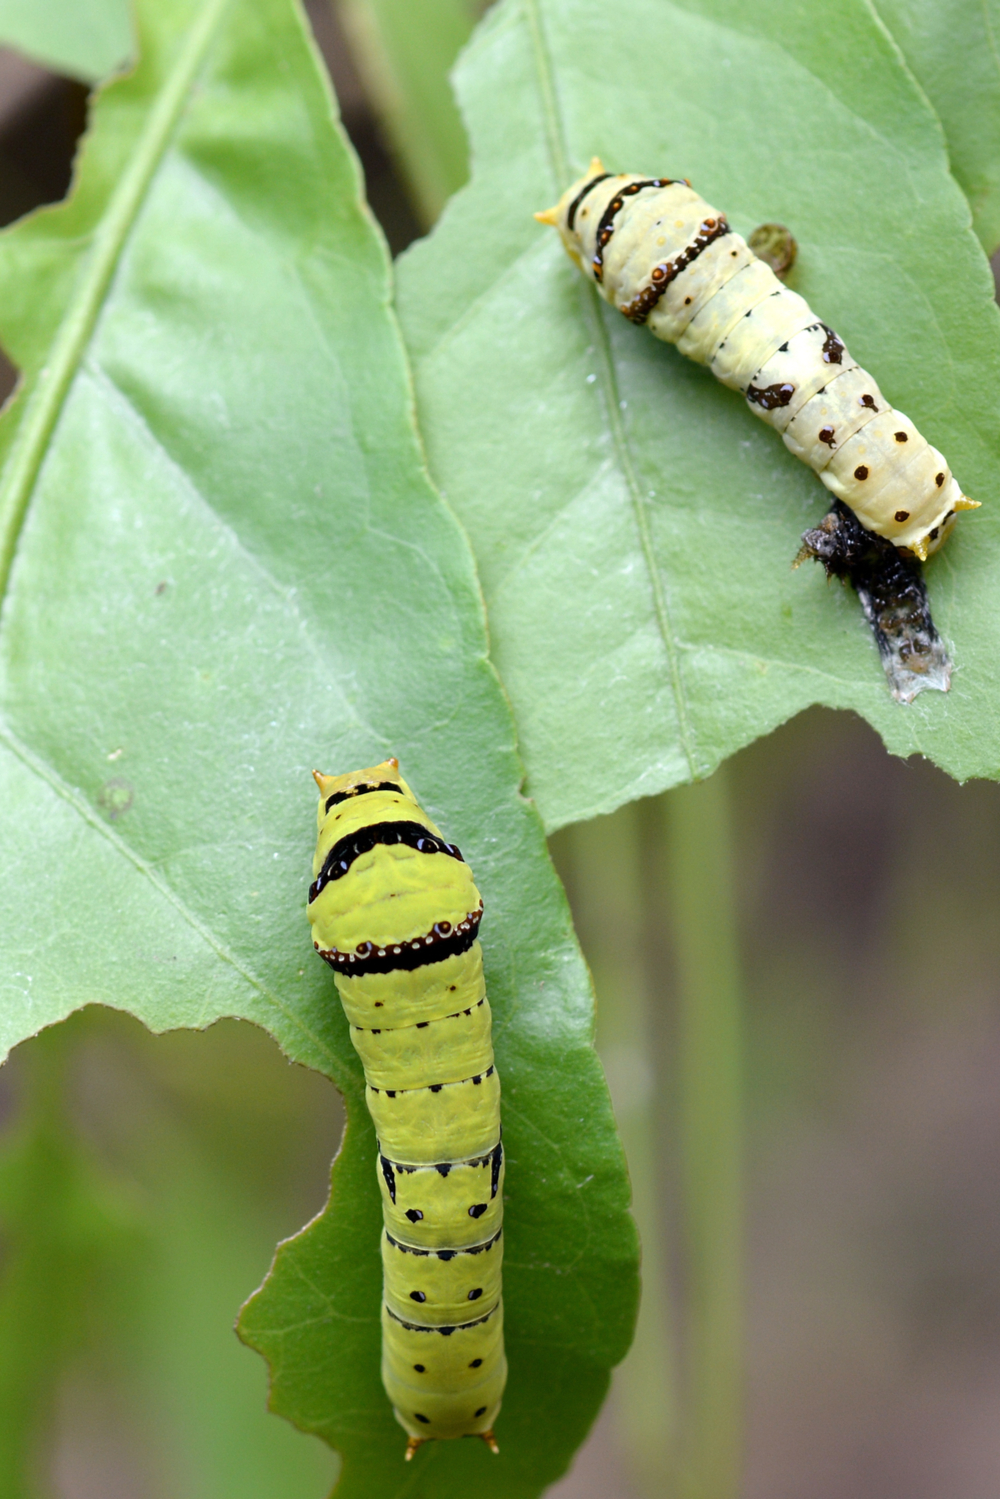 Harm of Caterpillars